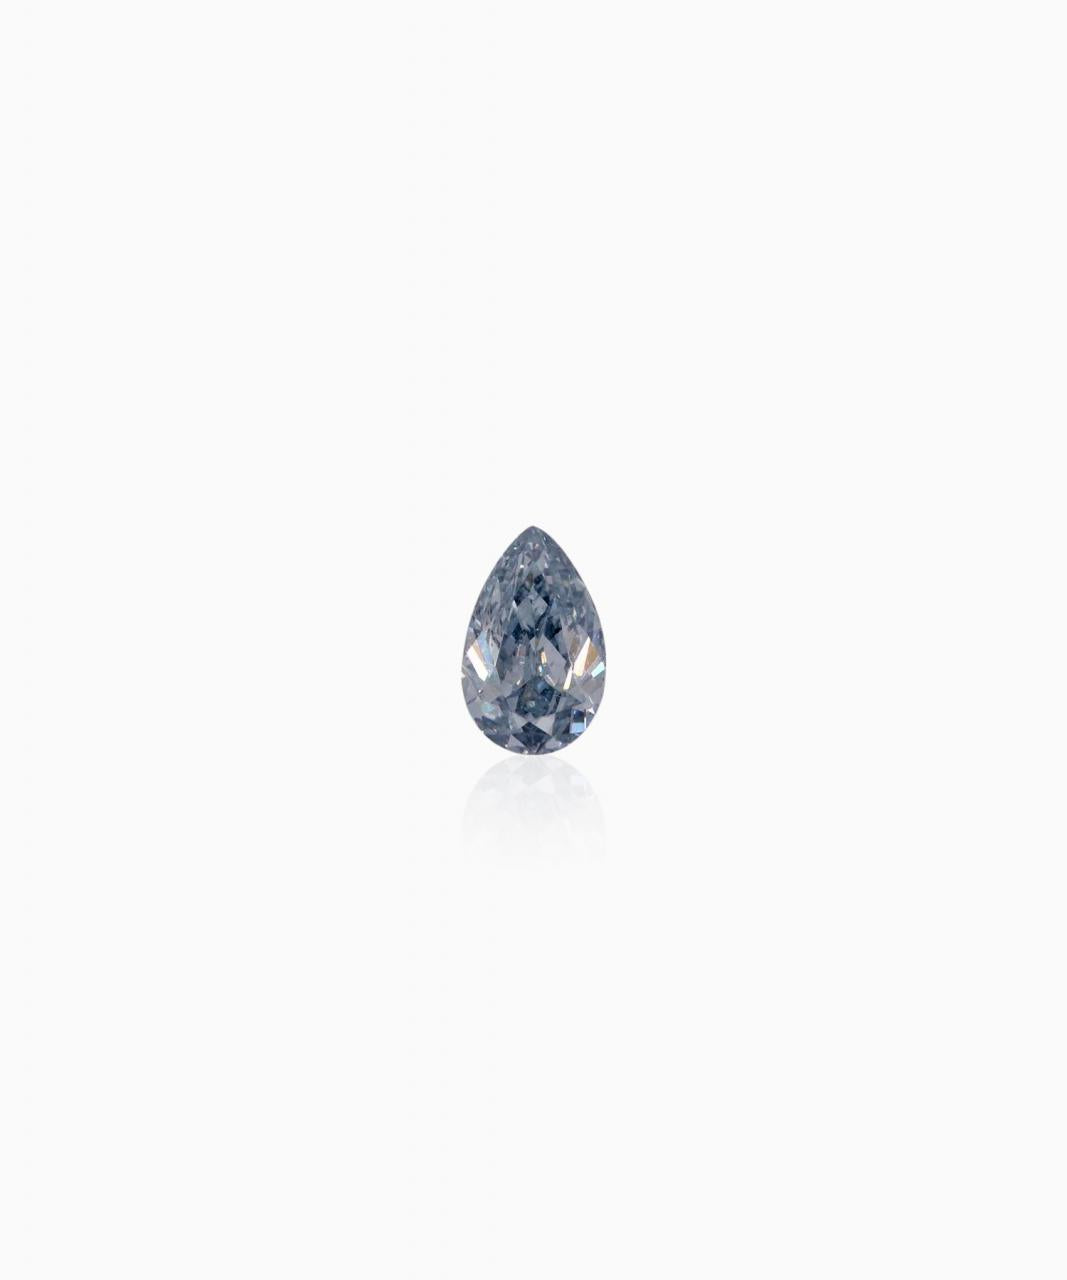 0.14ct Natural Fancy Light Bluish Grey, BL2, VS2, Argyle Blue Diamond